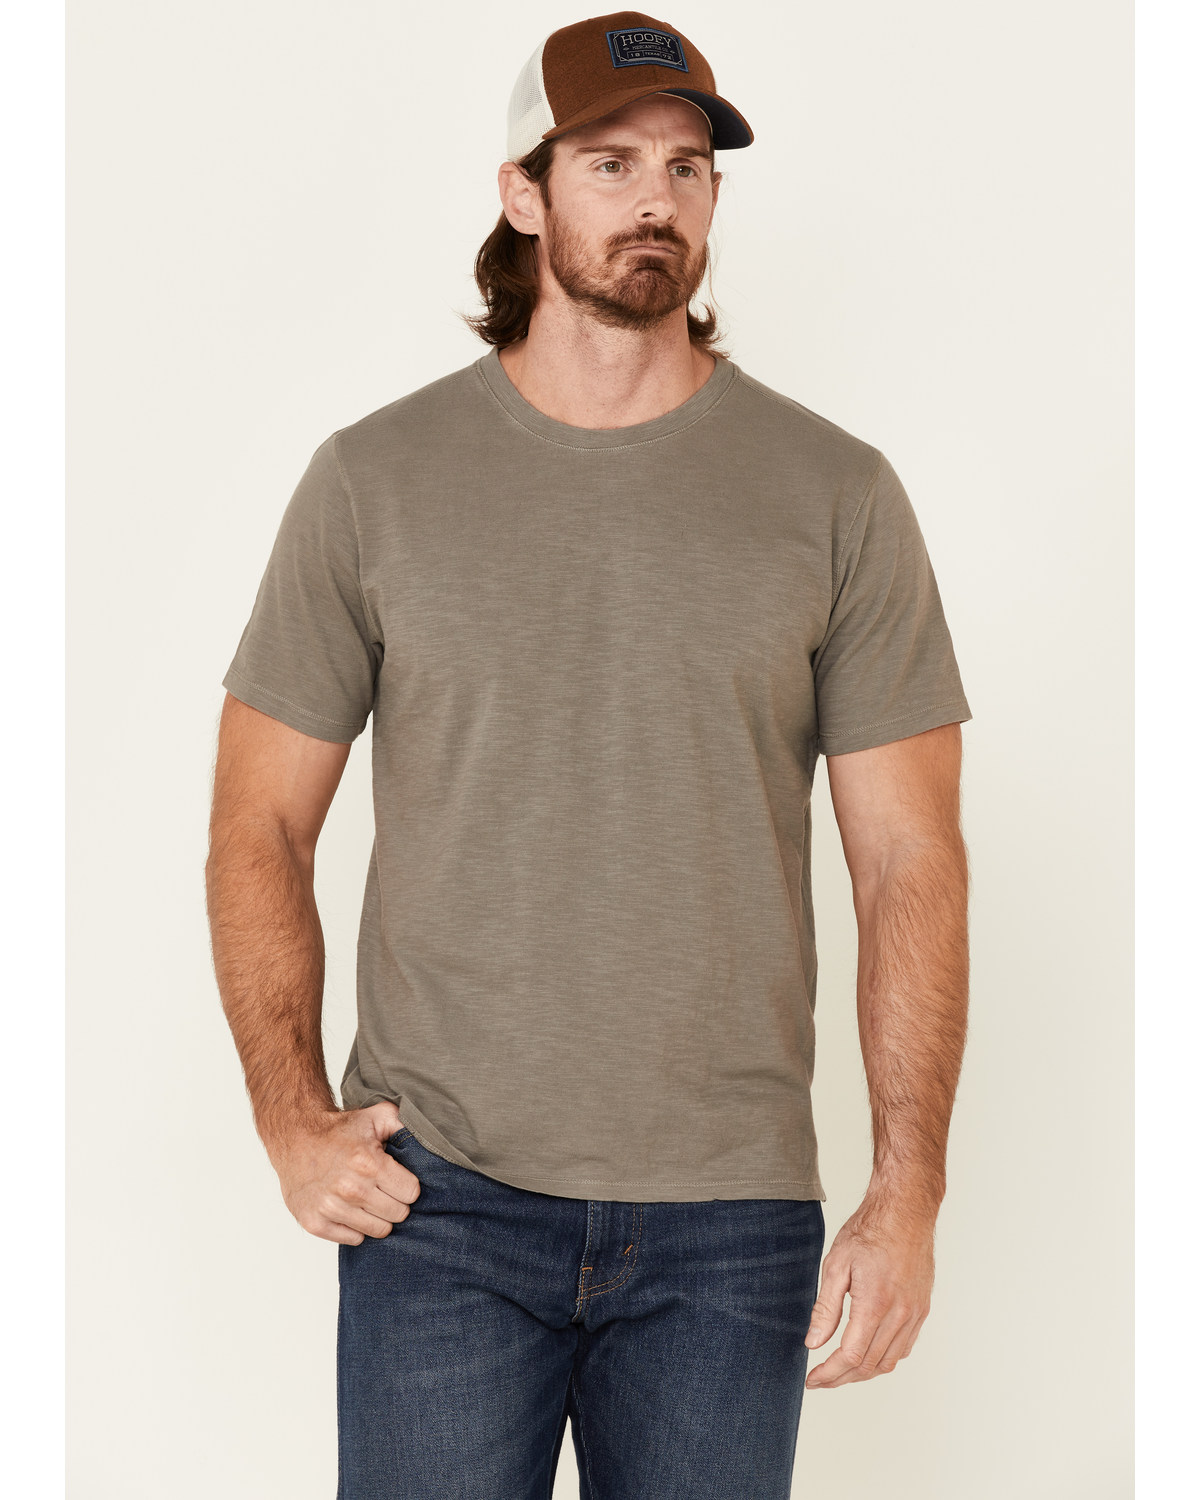 North River Men's Solid Slub Short Sleeve T-Shirt